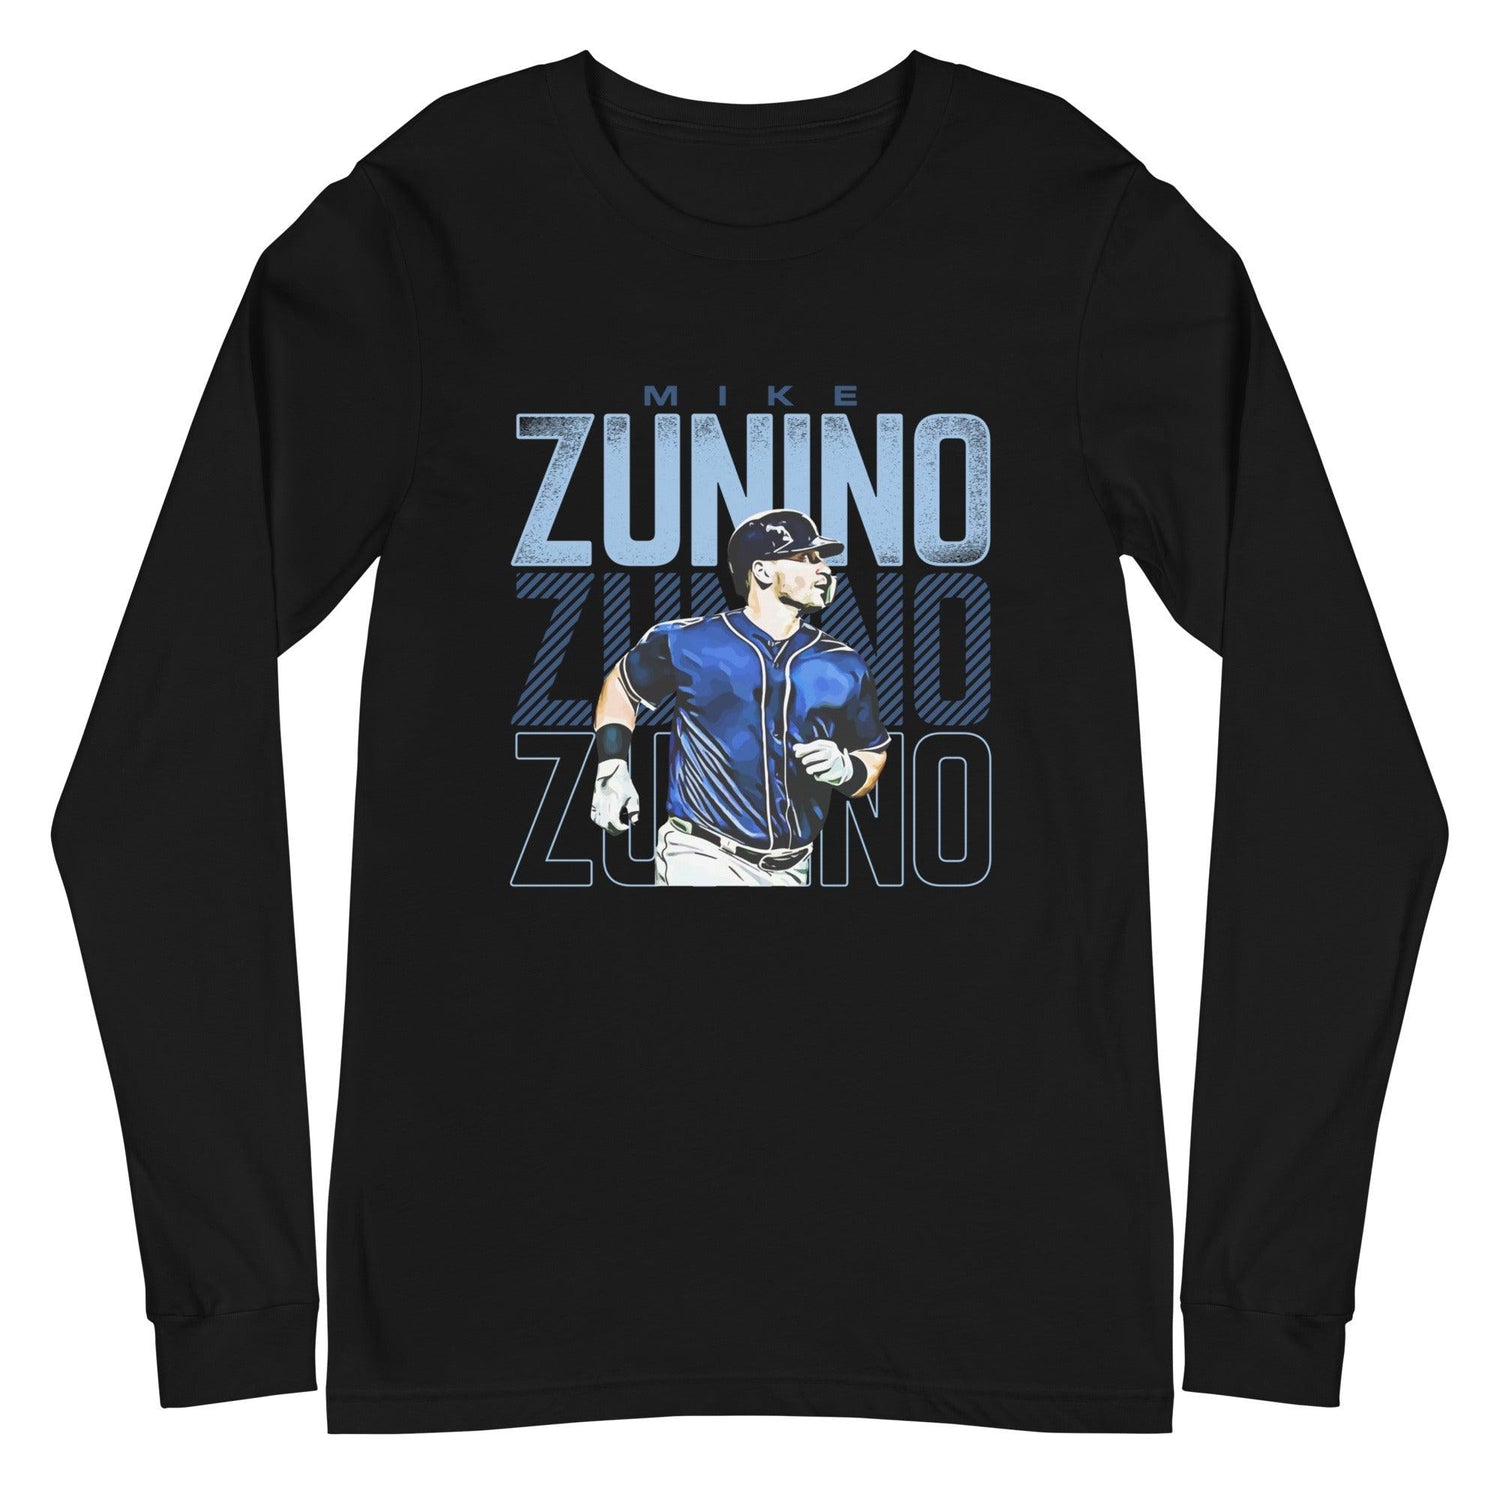 Mike Zunino "Walk Off" Long Sleeve Tee - Fan Arch